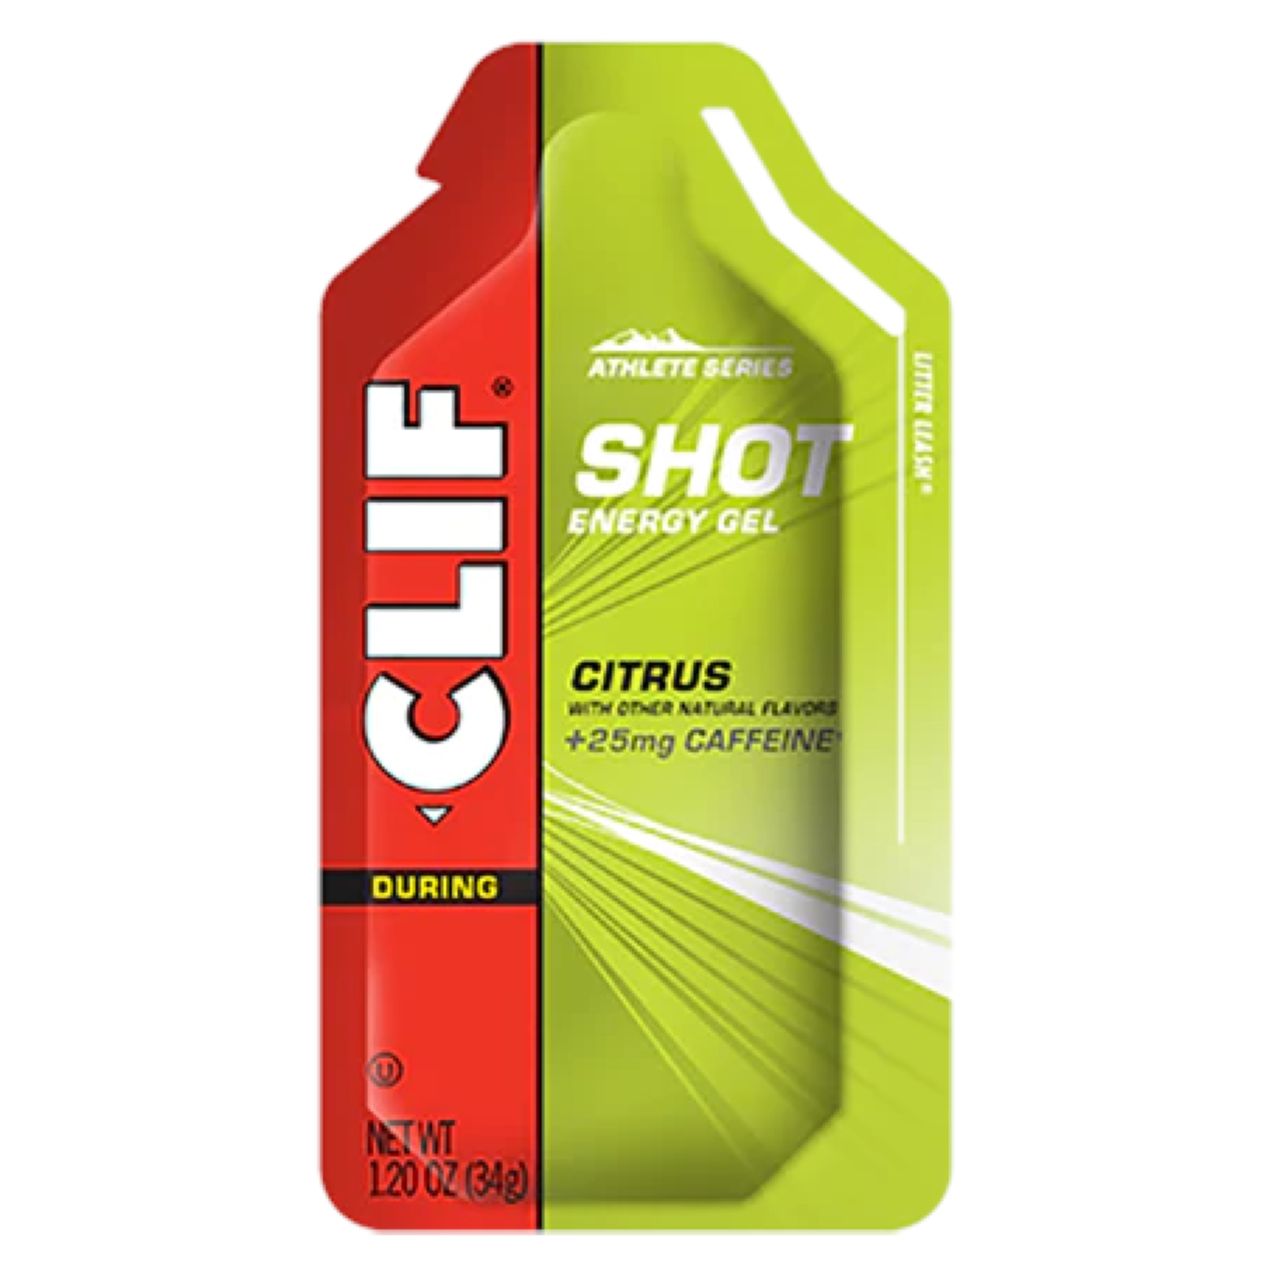 Clif Shot Energy Gel - Citrus with Caffeine